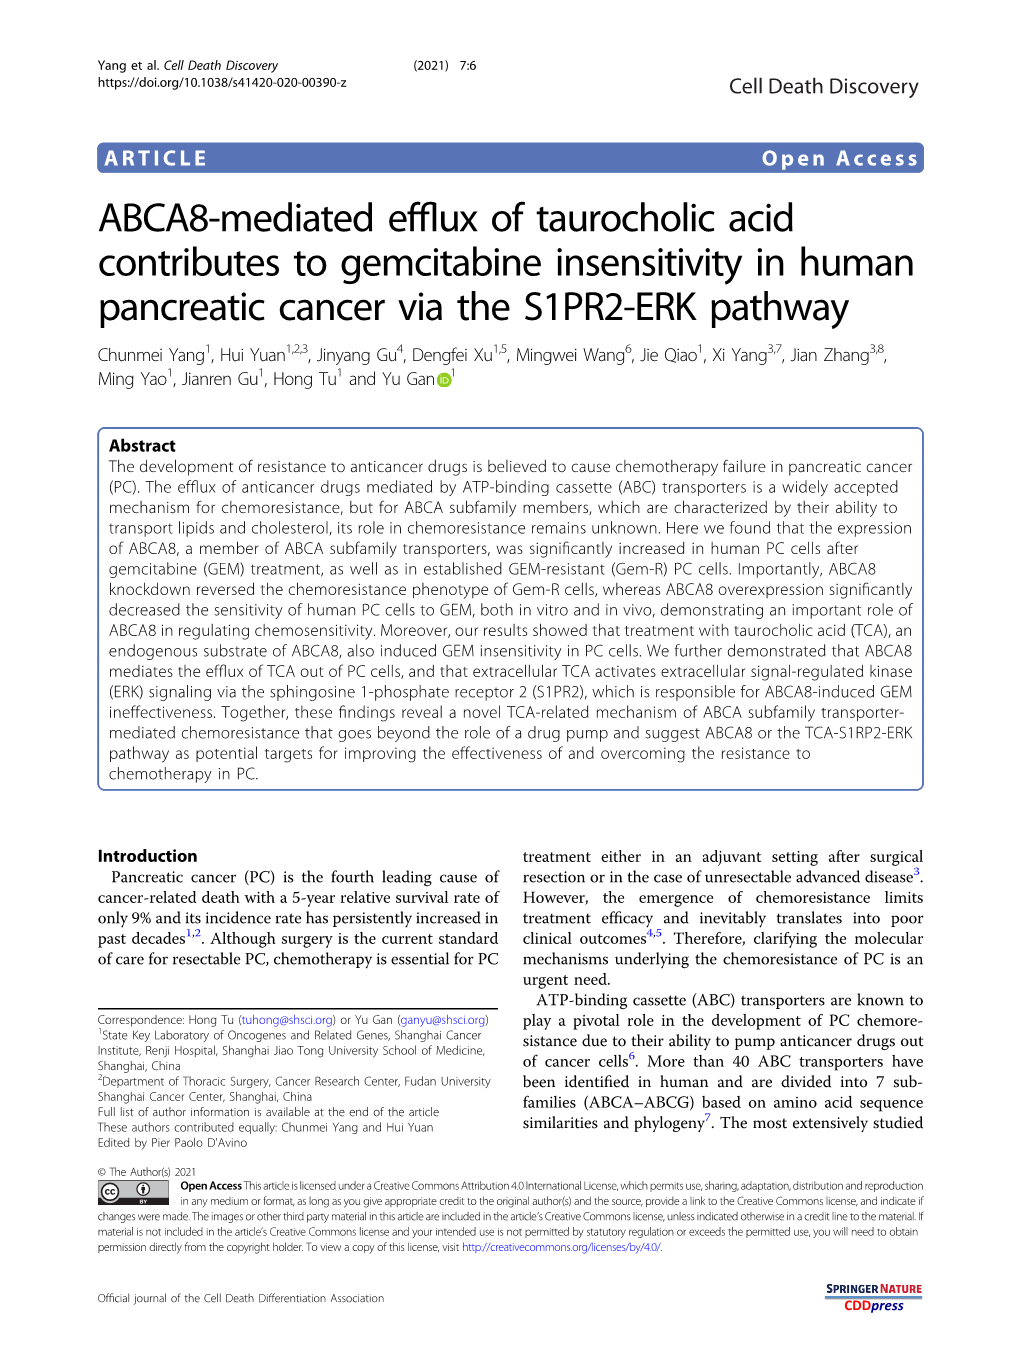 ABCA8-Mediated Efflux of Taurocholic Acid Contributes to Gemcitabine